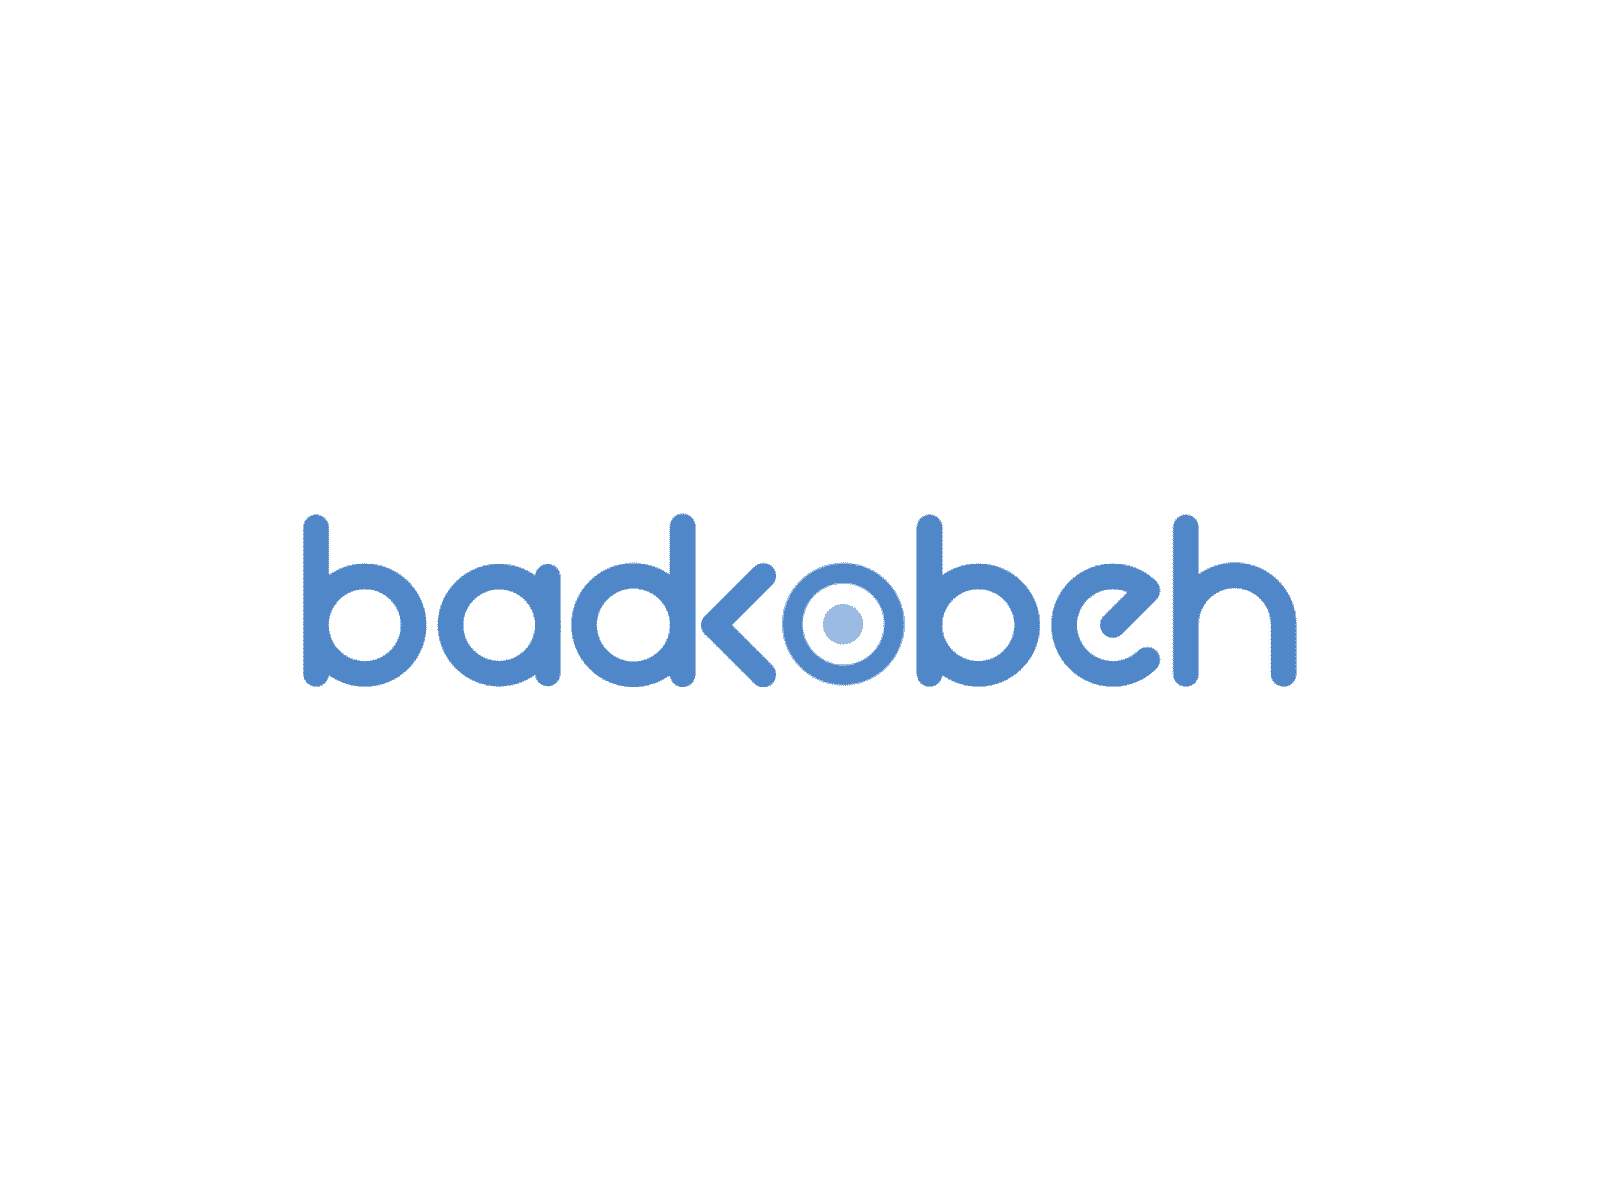 Badkooben animated logo